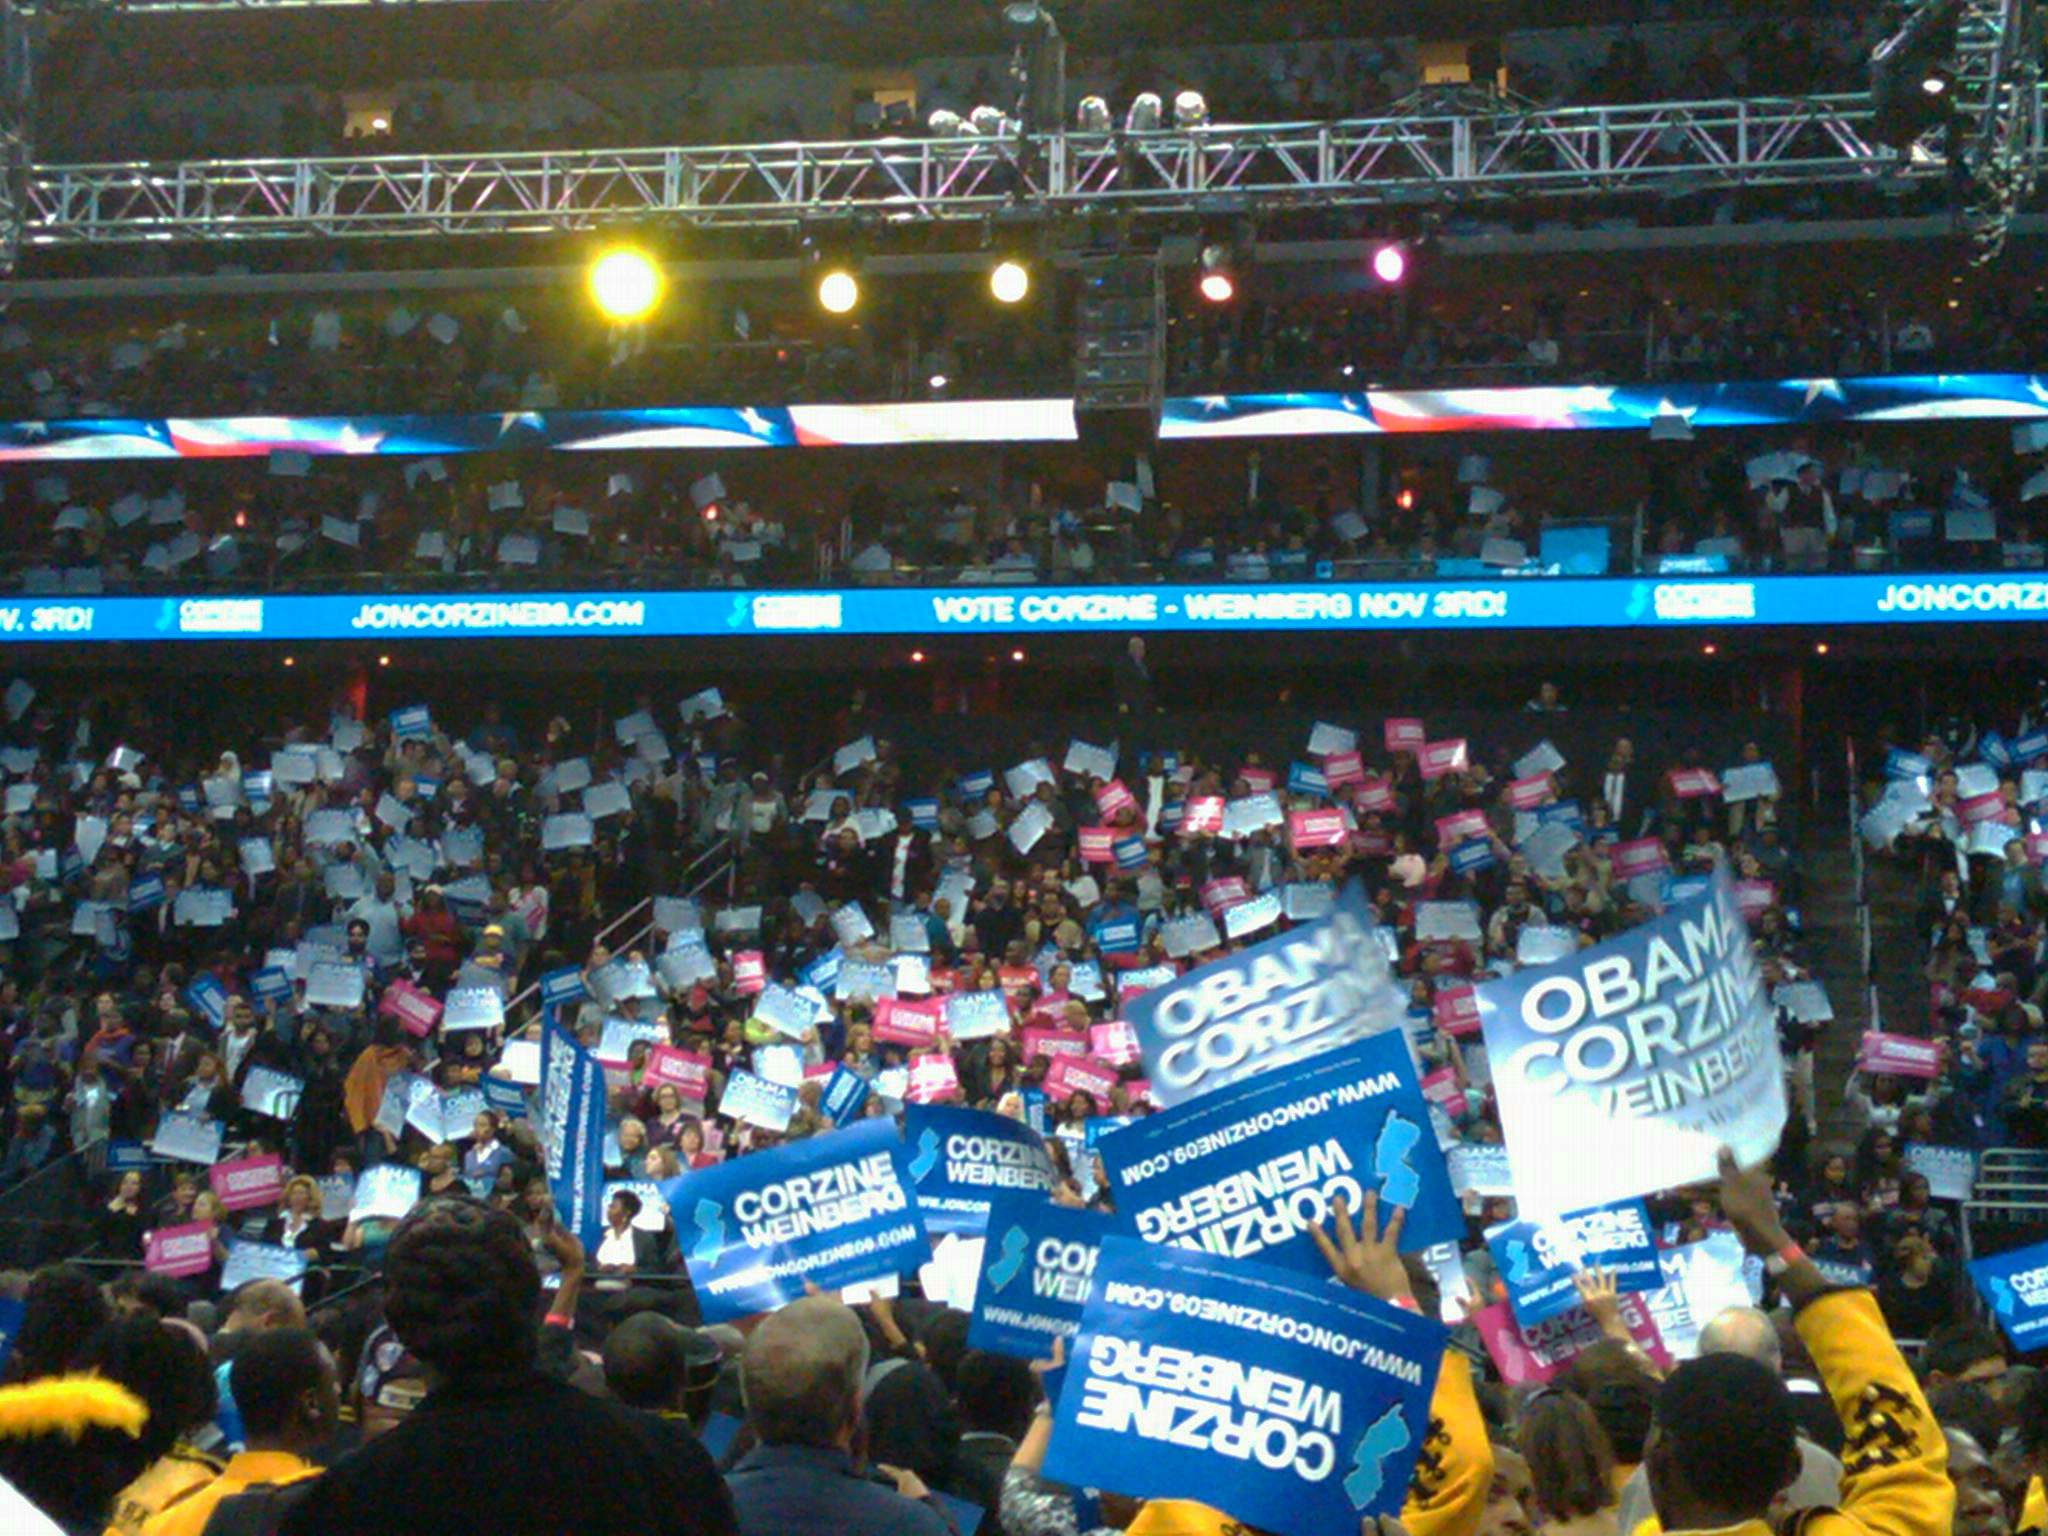 Obama Corzine Rally Prudential Center NJ.jpg